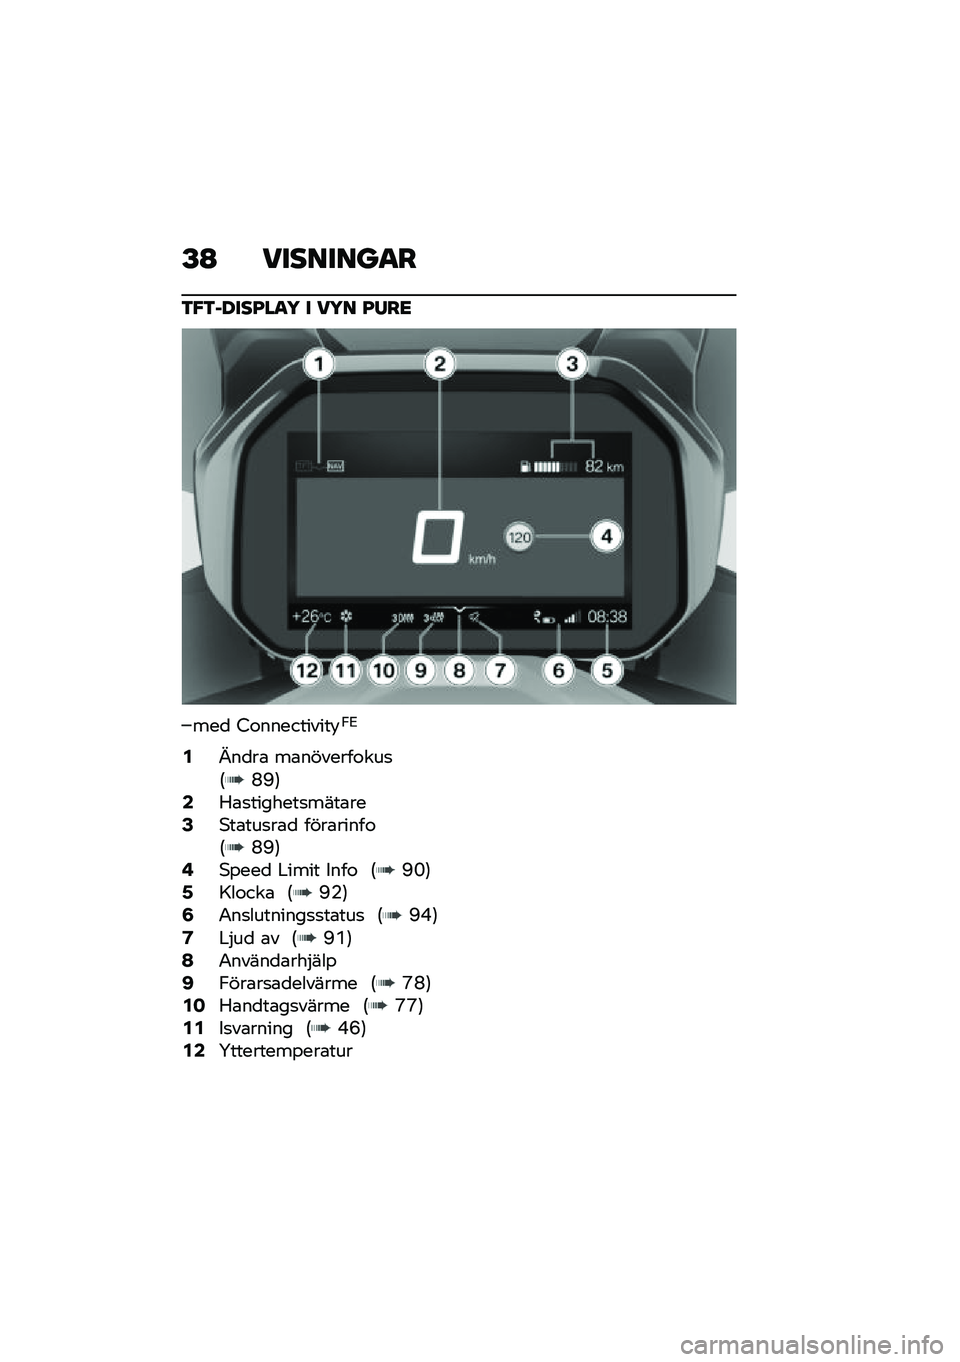 BMW MOTORRAD C 400 GT 2021  Instruktionsbok (in Swedish) �F�B ��������
�
�3�"�3�,����I��
�5 � ��5� �I�/��<
���
 �8�\f����������!�0�6
�2�V��
��\b ��\b�������\f���
�:�J�L�;�4�5�\b�
�������
����\b���6�*��\b��